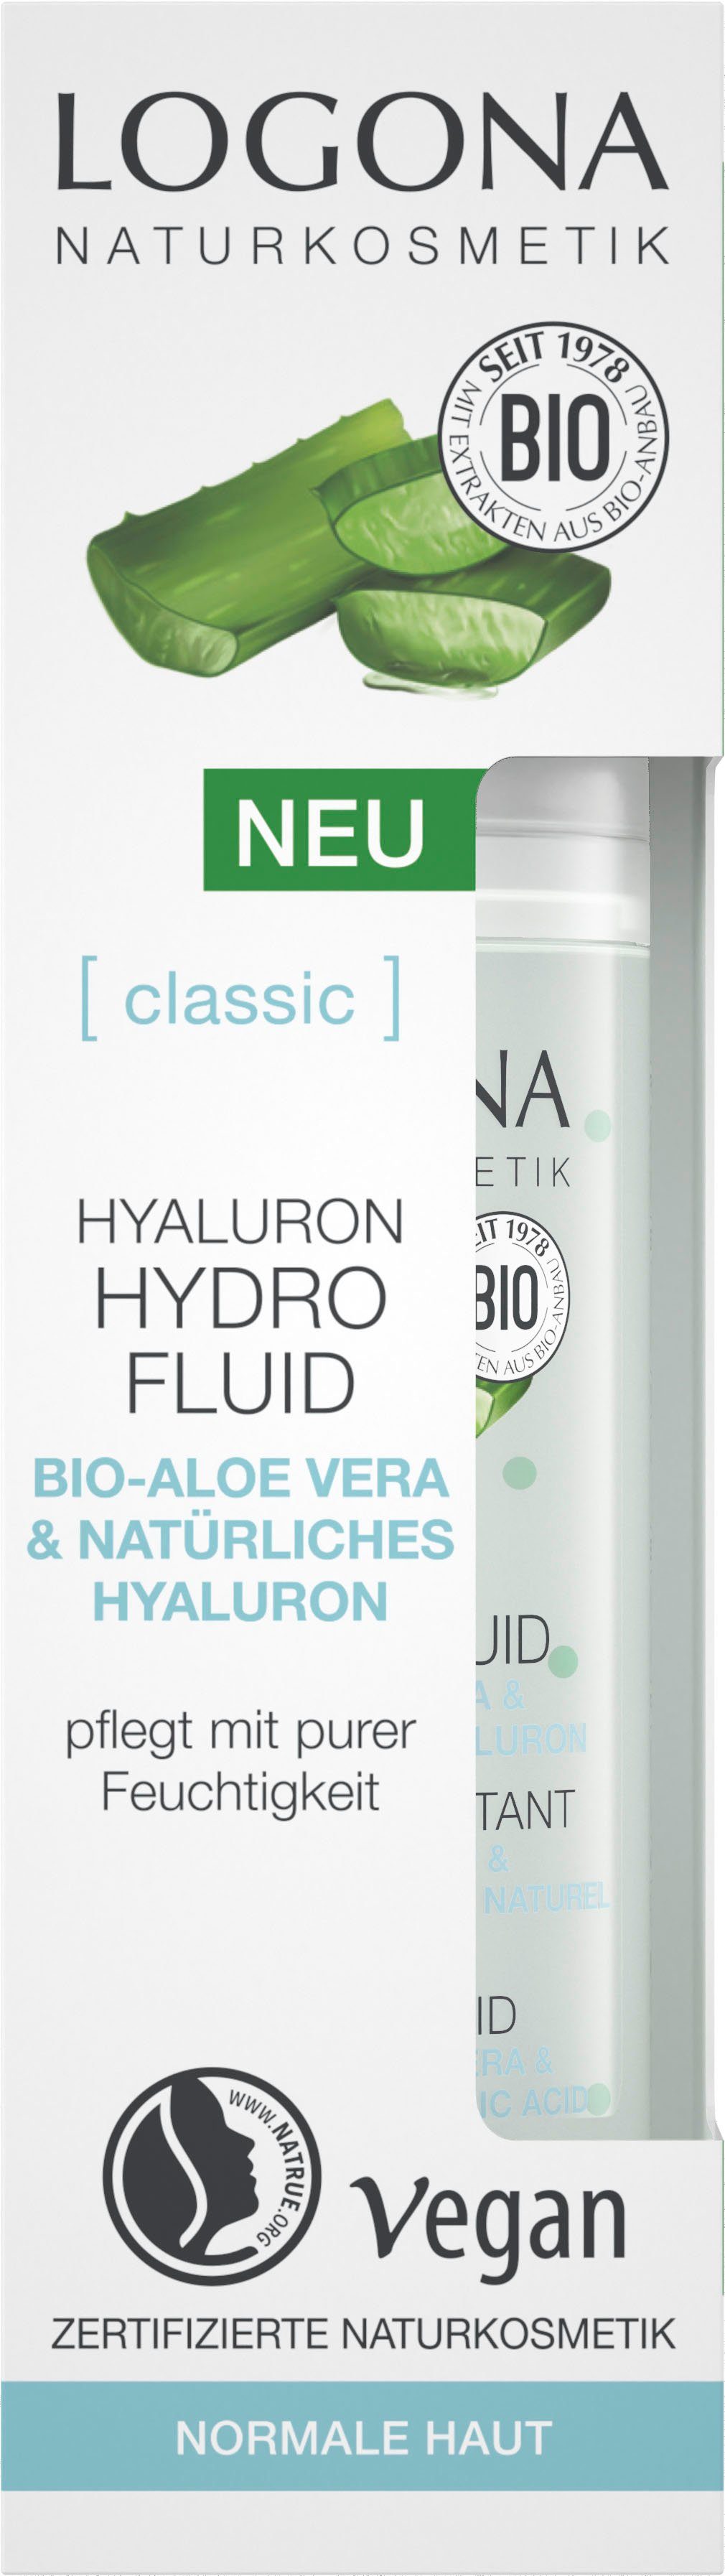 LOGONA Gesichtsfluid Logona [classic] Fluid Hydro Hyaluron